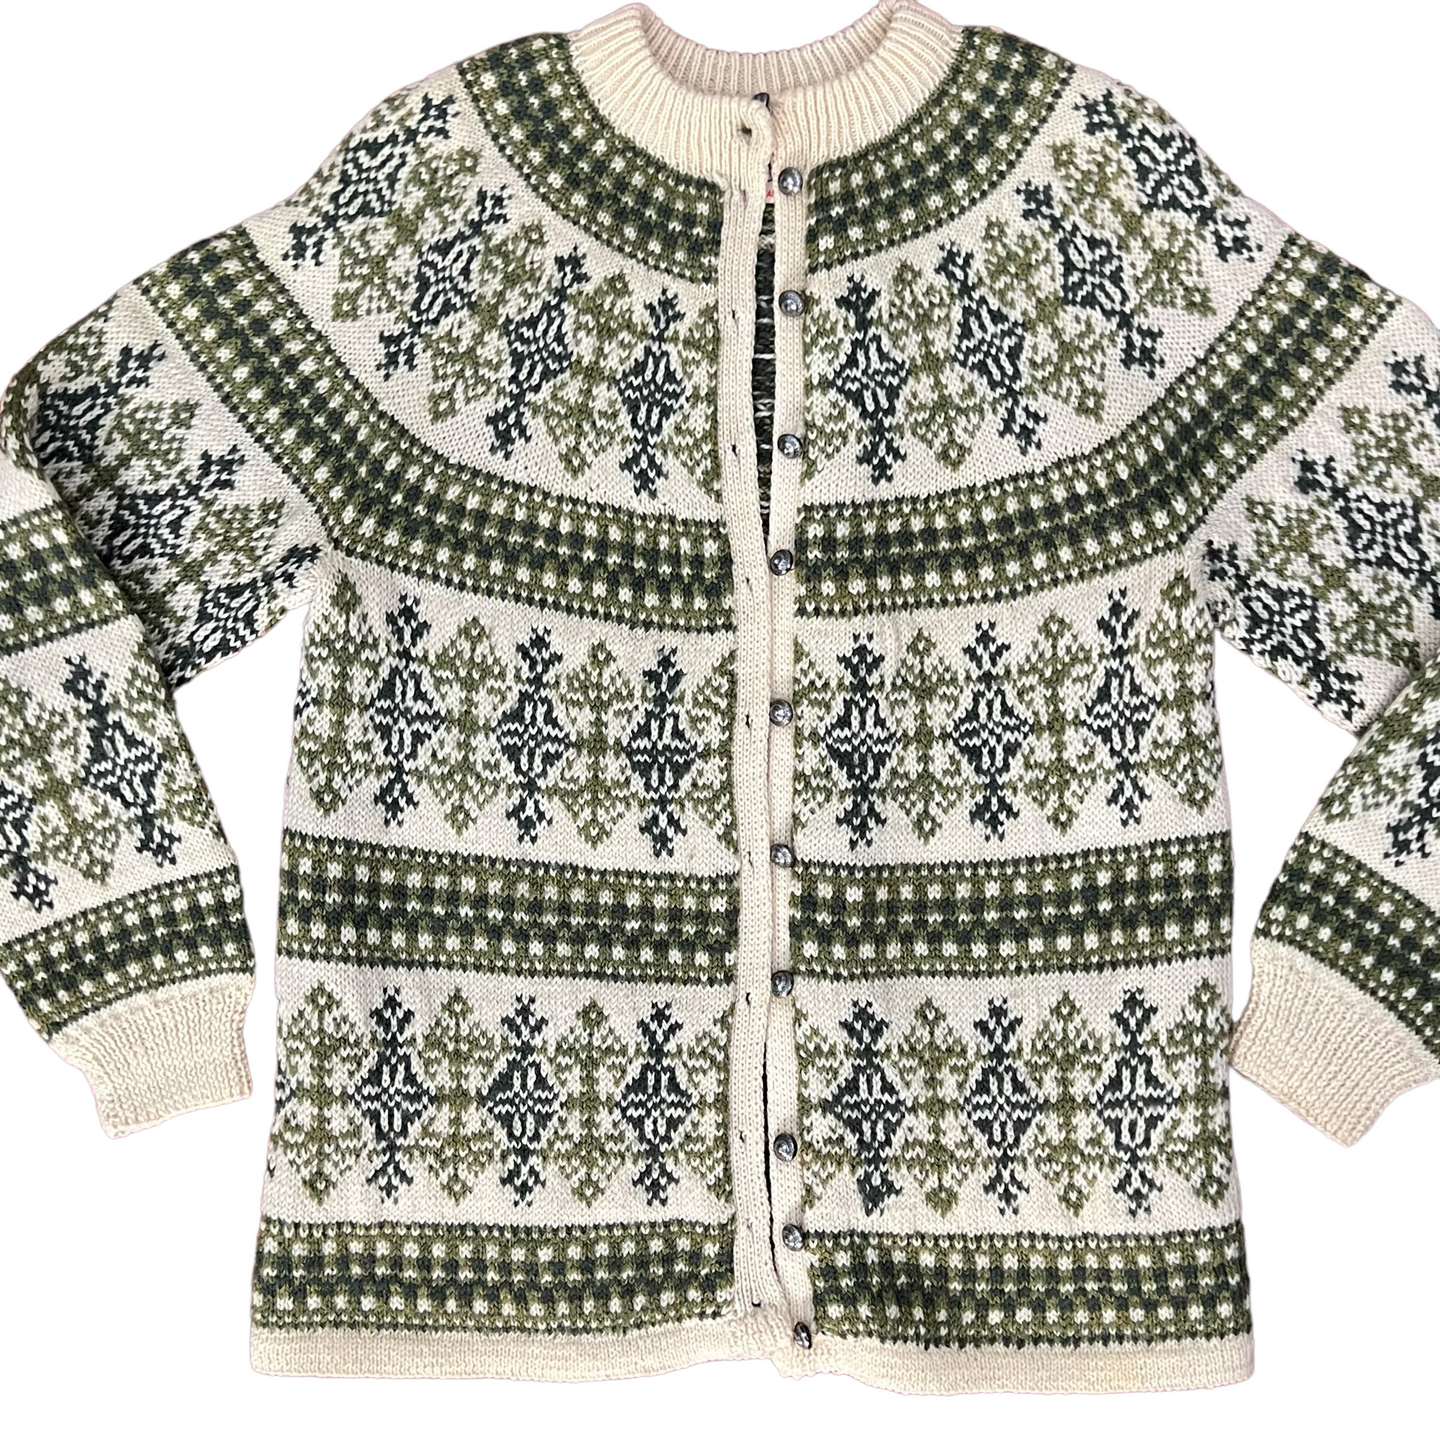 VTG Paul Mage Denmark Cardigan Sweater Handmade Fair Isle 100% Wool Size M